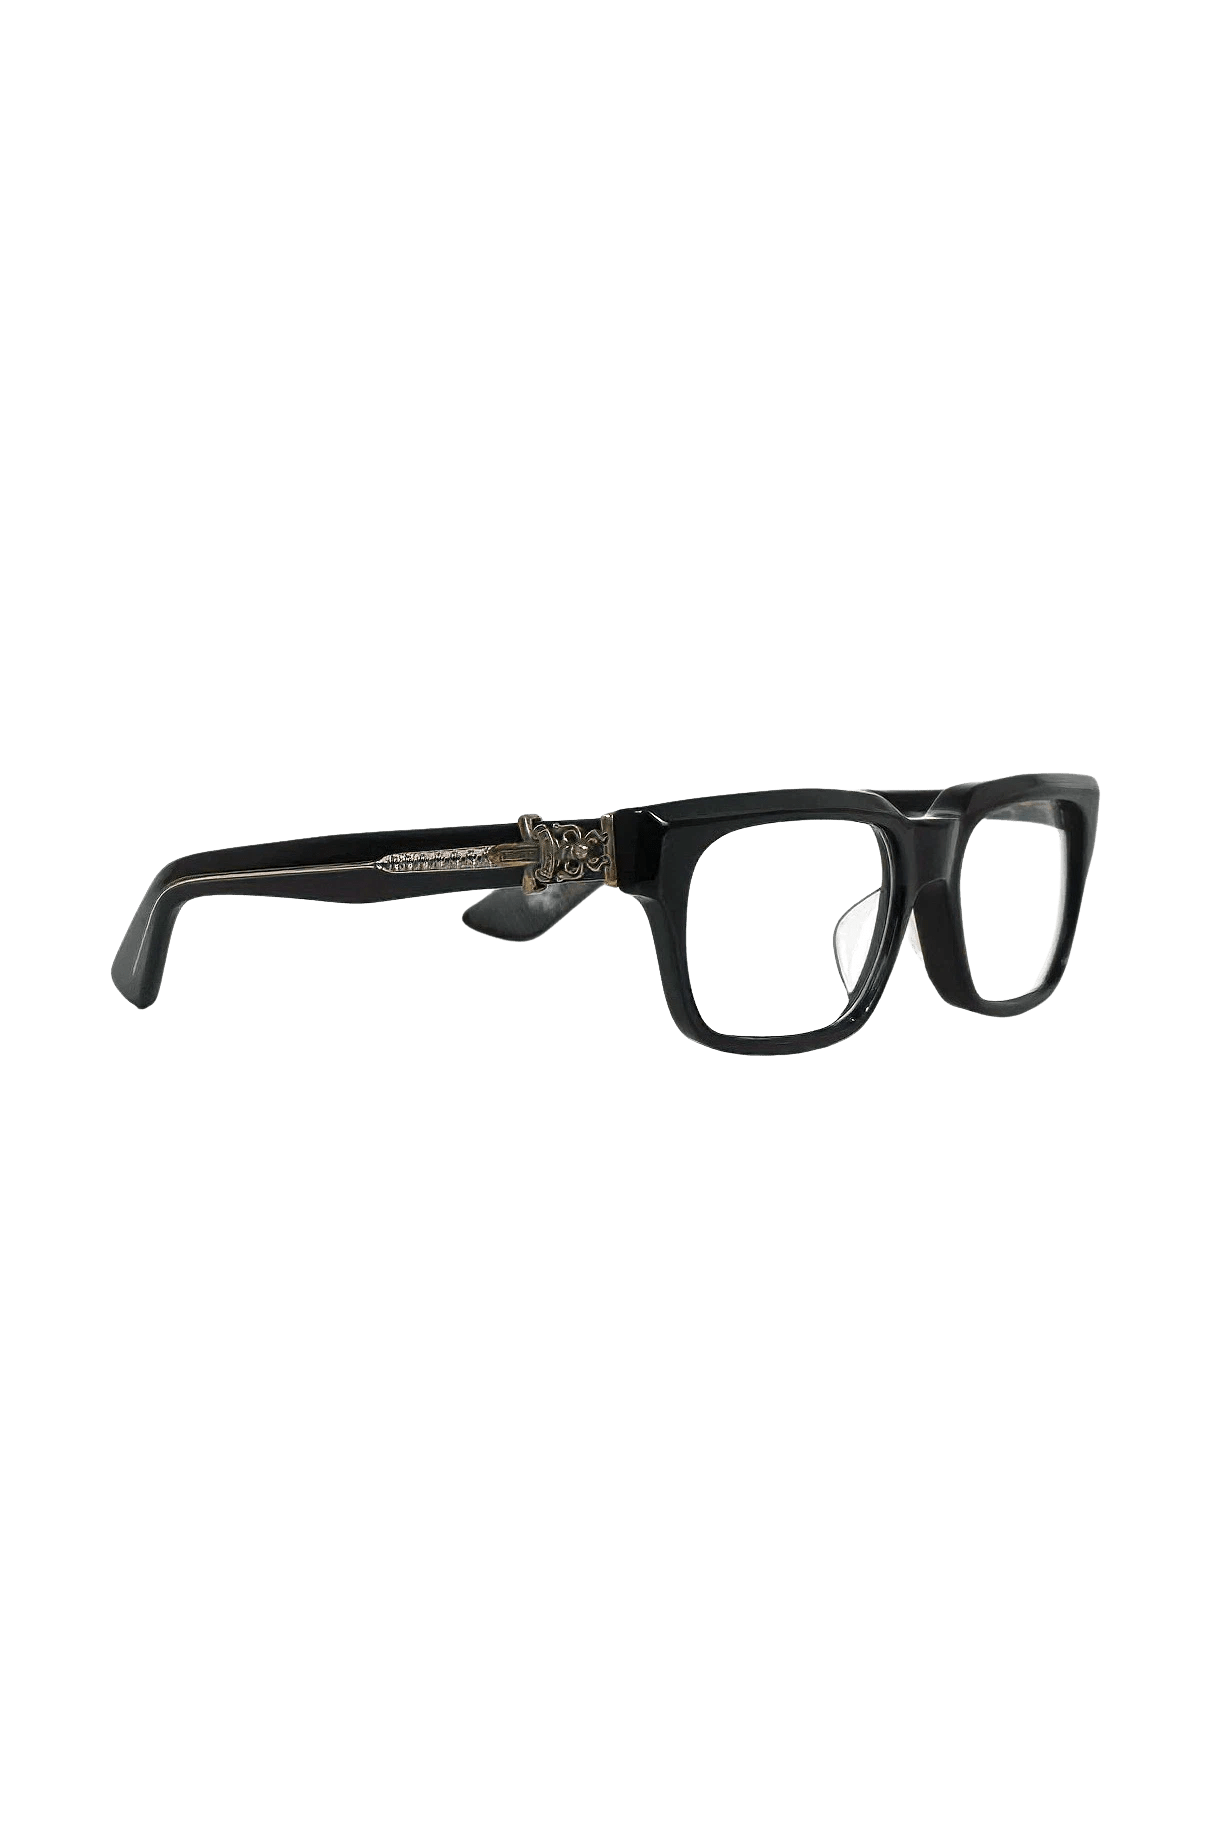 Chrome Hearts "Vagillionaire" i Black Glasses Silver Hardware